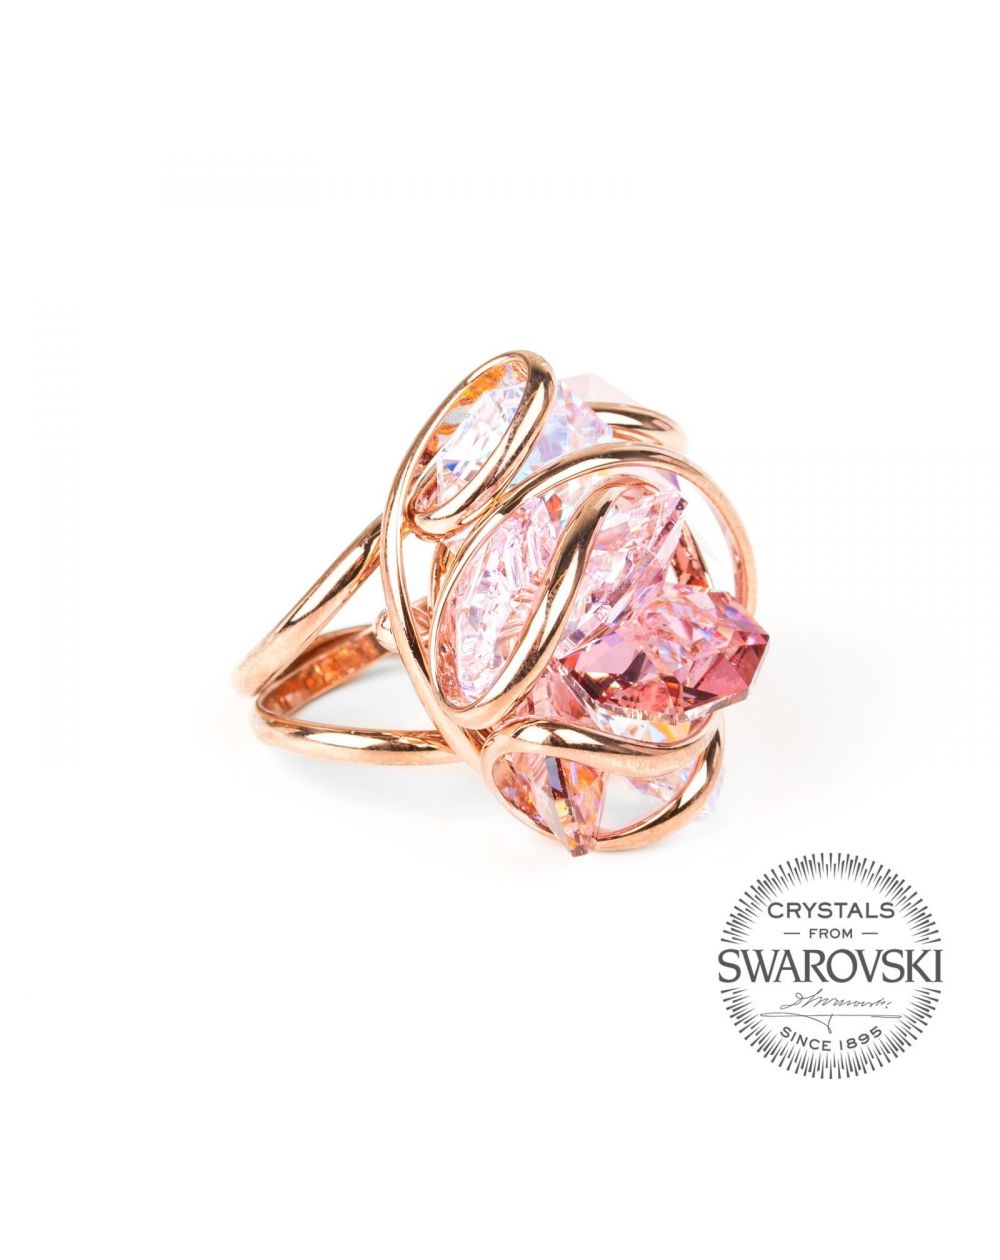 Marazzini - kristallen ring Swarovski roze bloem